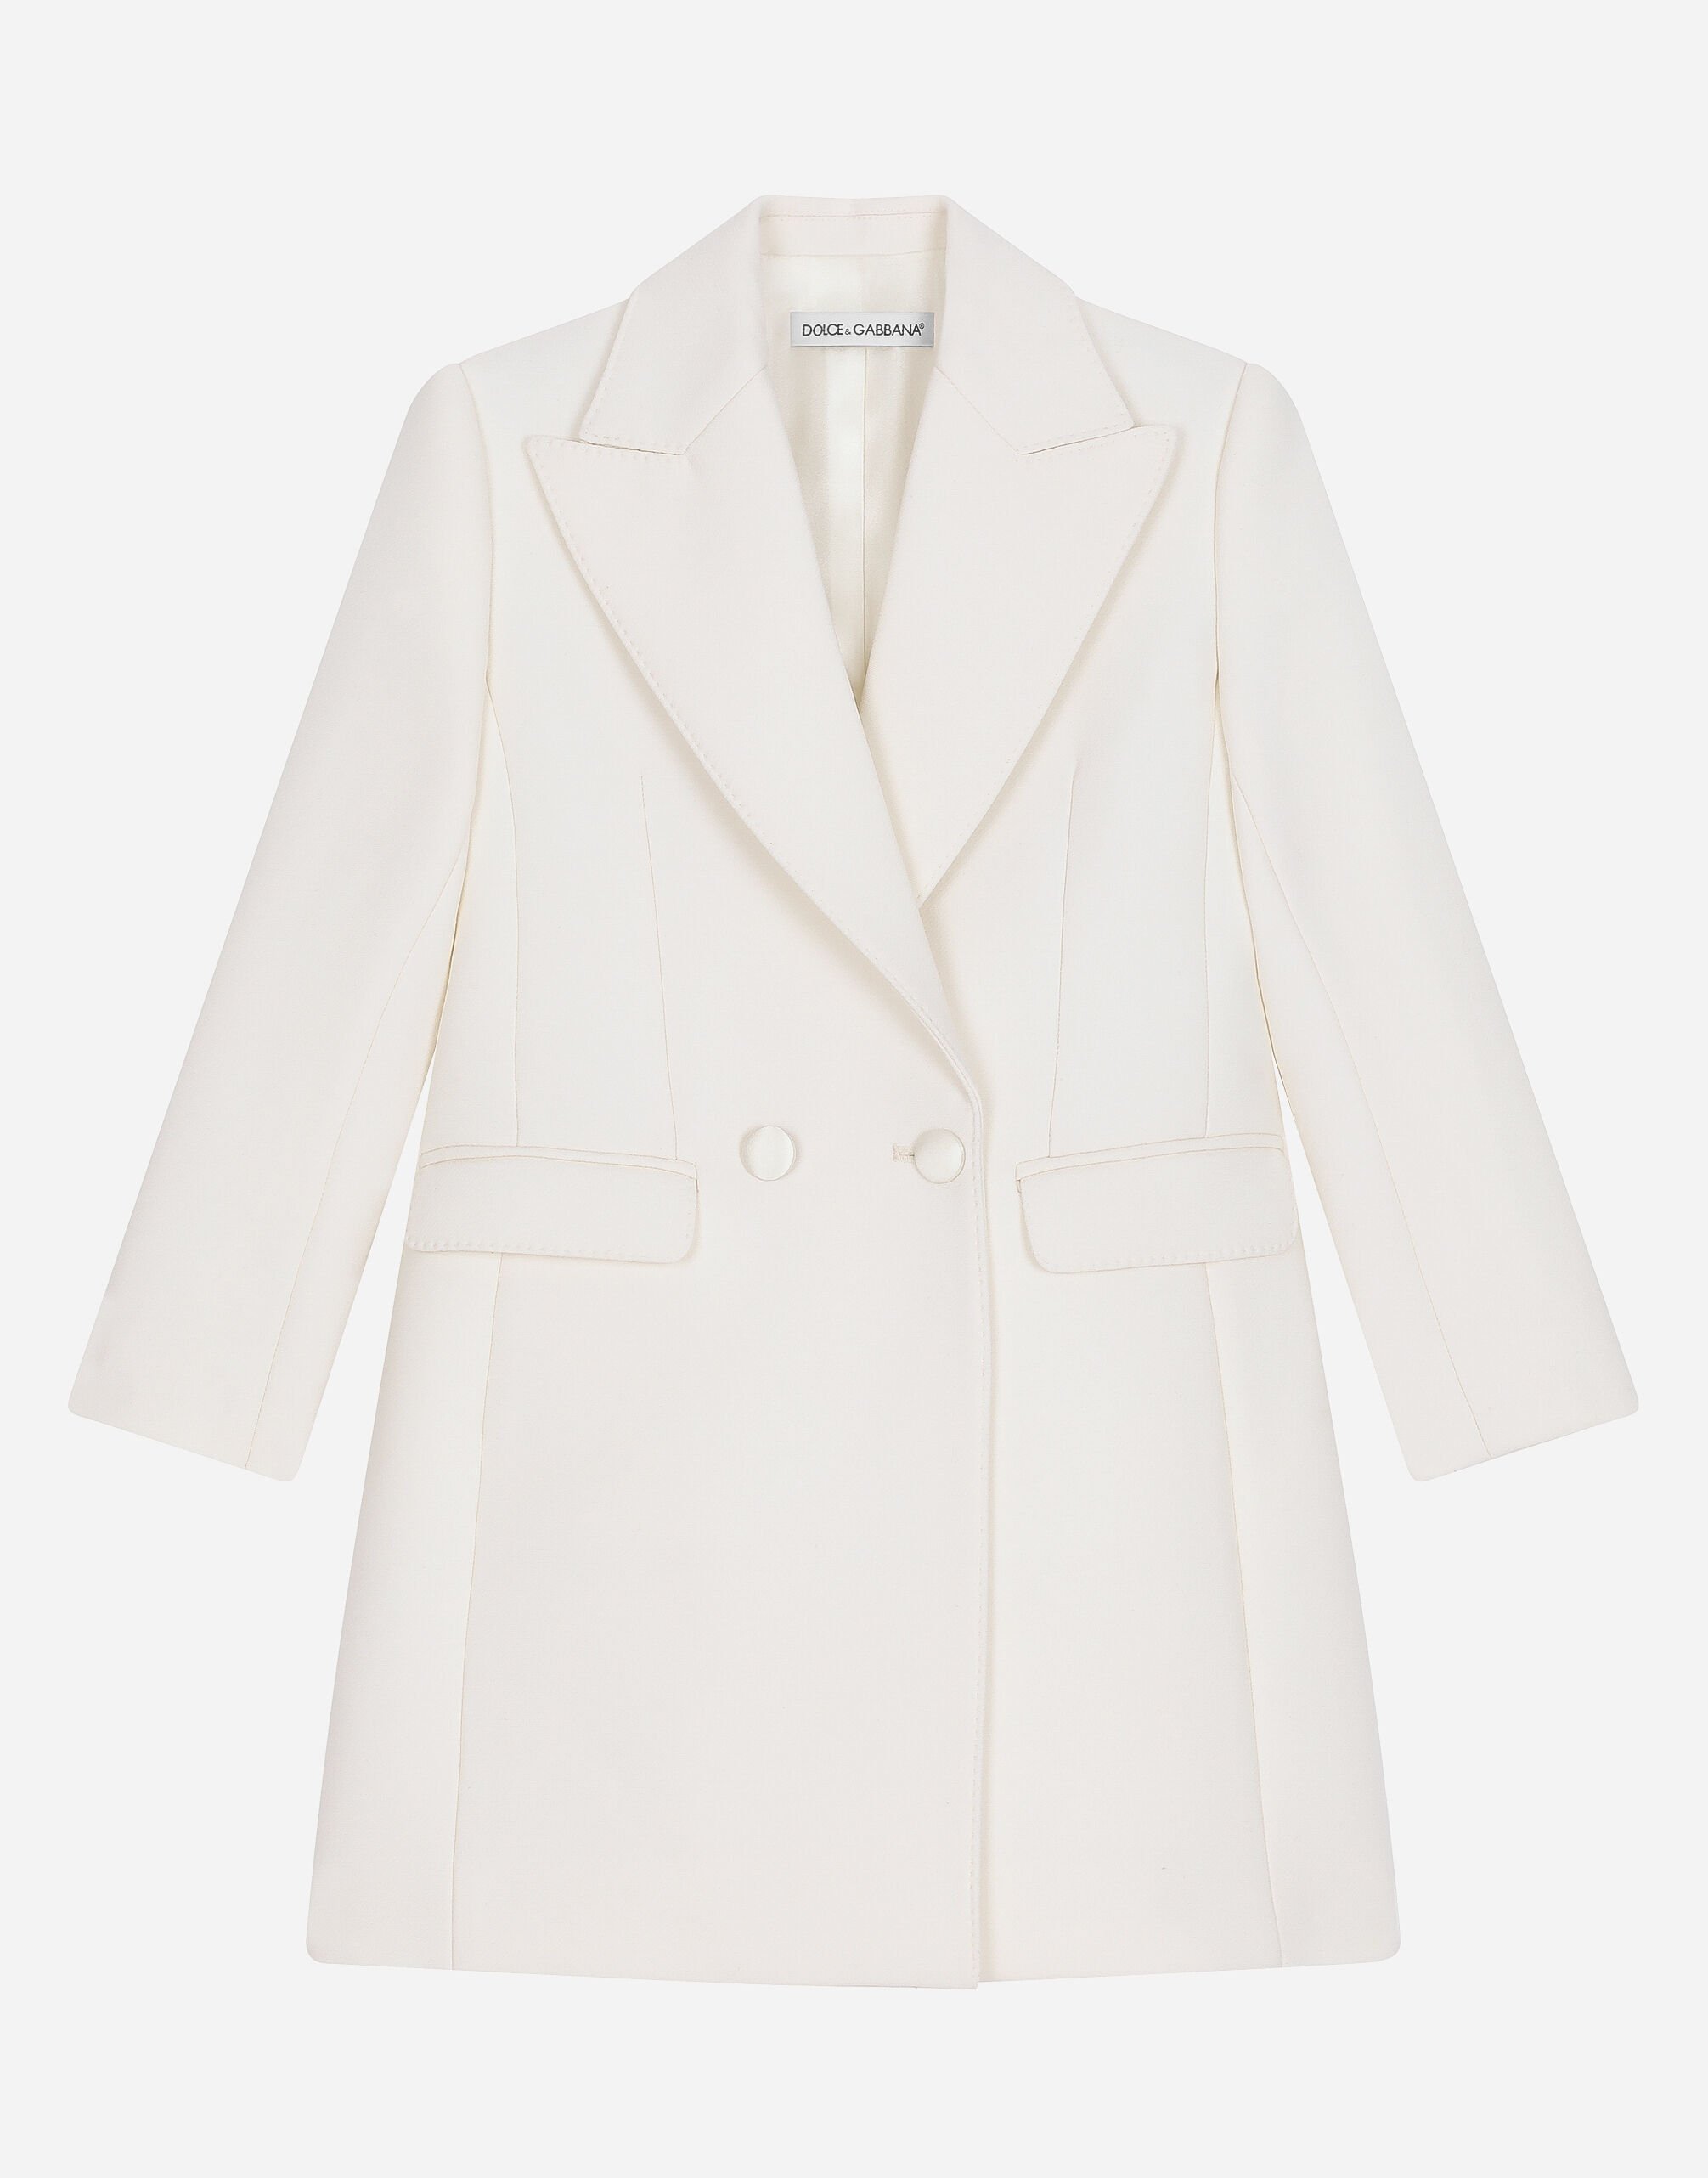 Dolce&Gabbana Zweireihiger Mantel aus Cady Weiss L5JTKTG7J7W